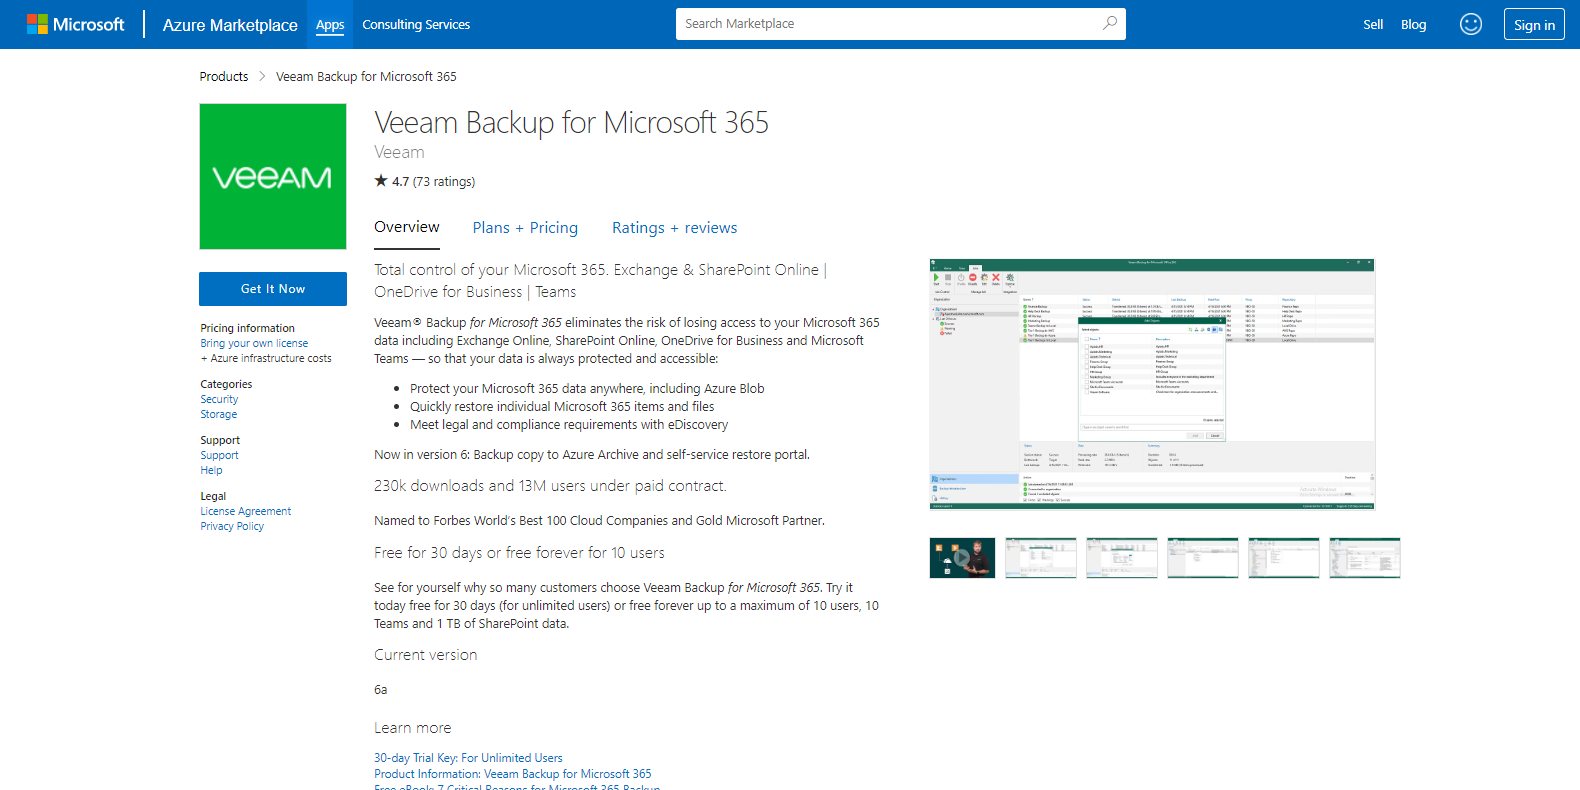 您可直接在 Azure Marketplace 中将 Veeam Backup for Microsoft 365 部署至虚拟机上。 